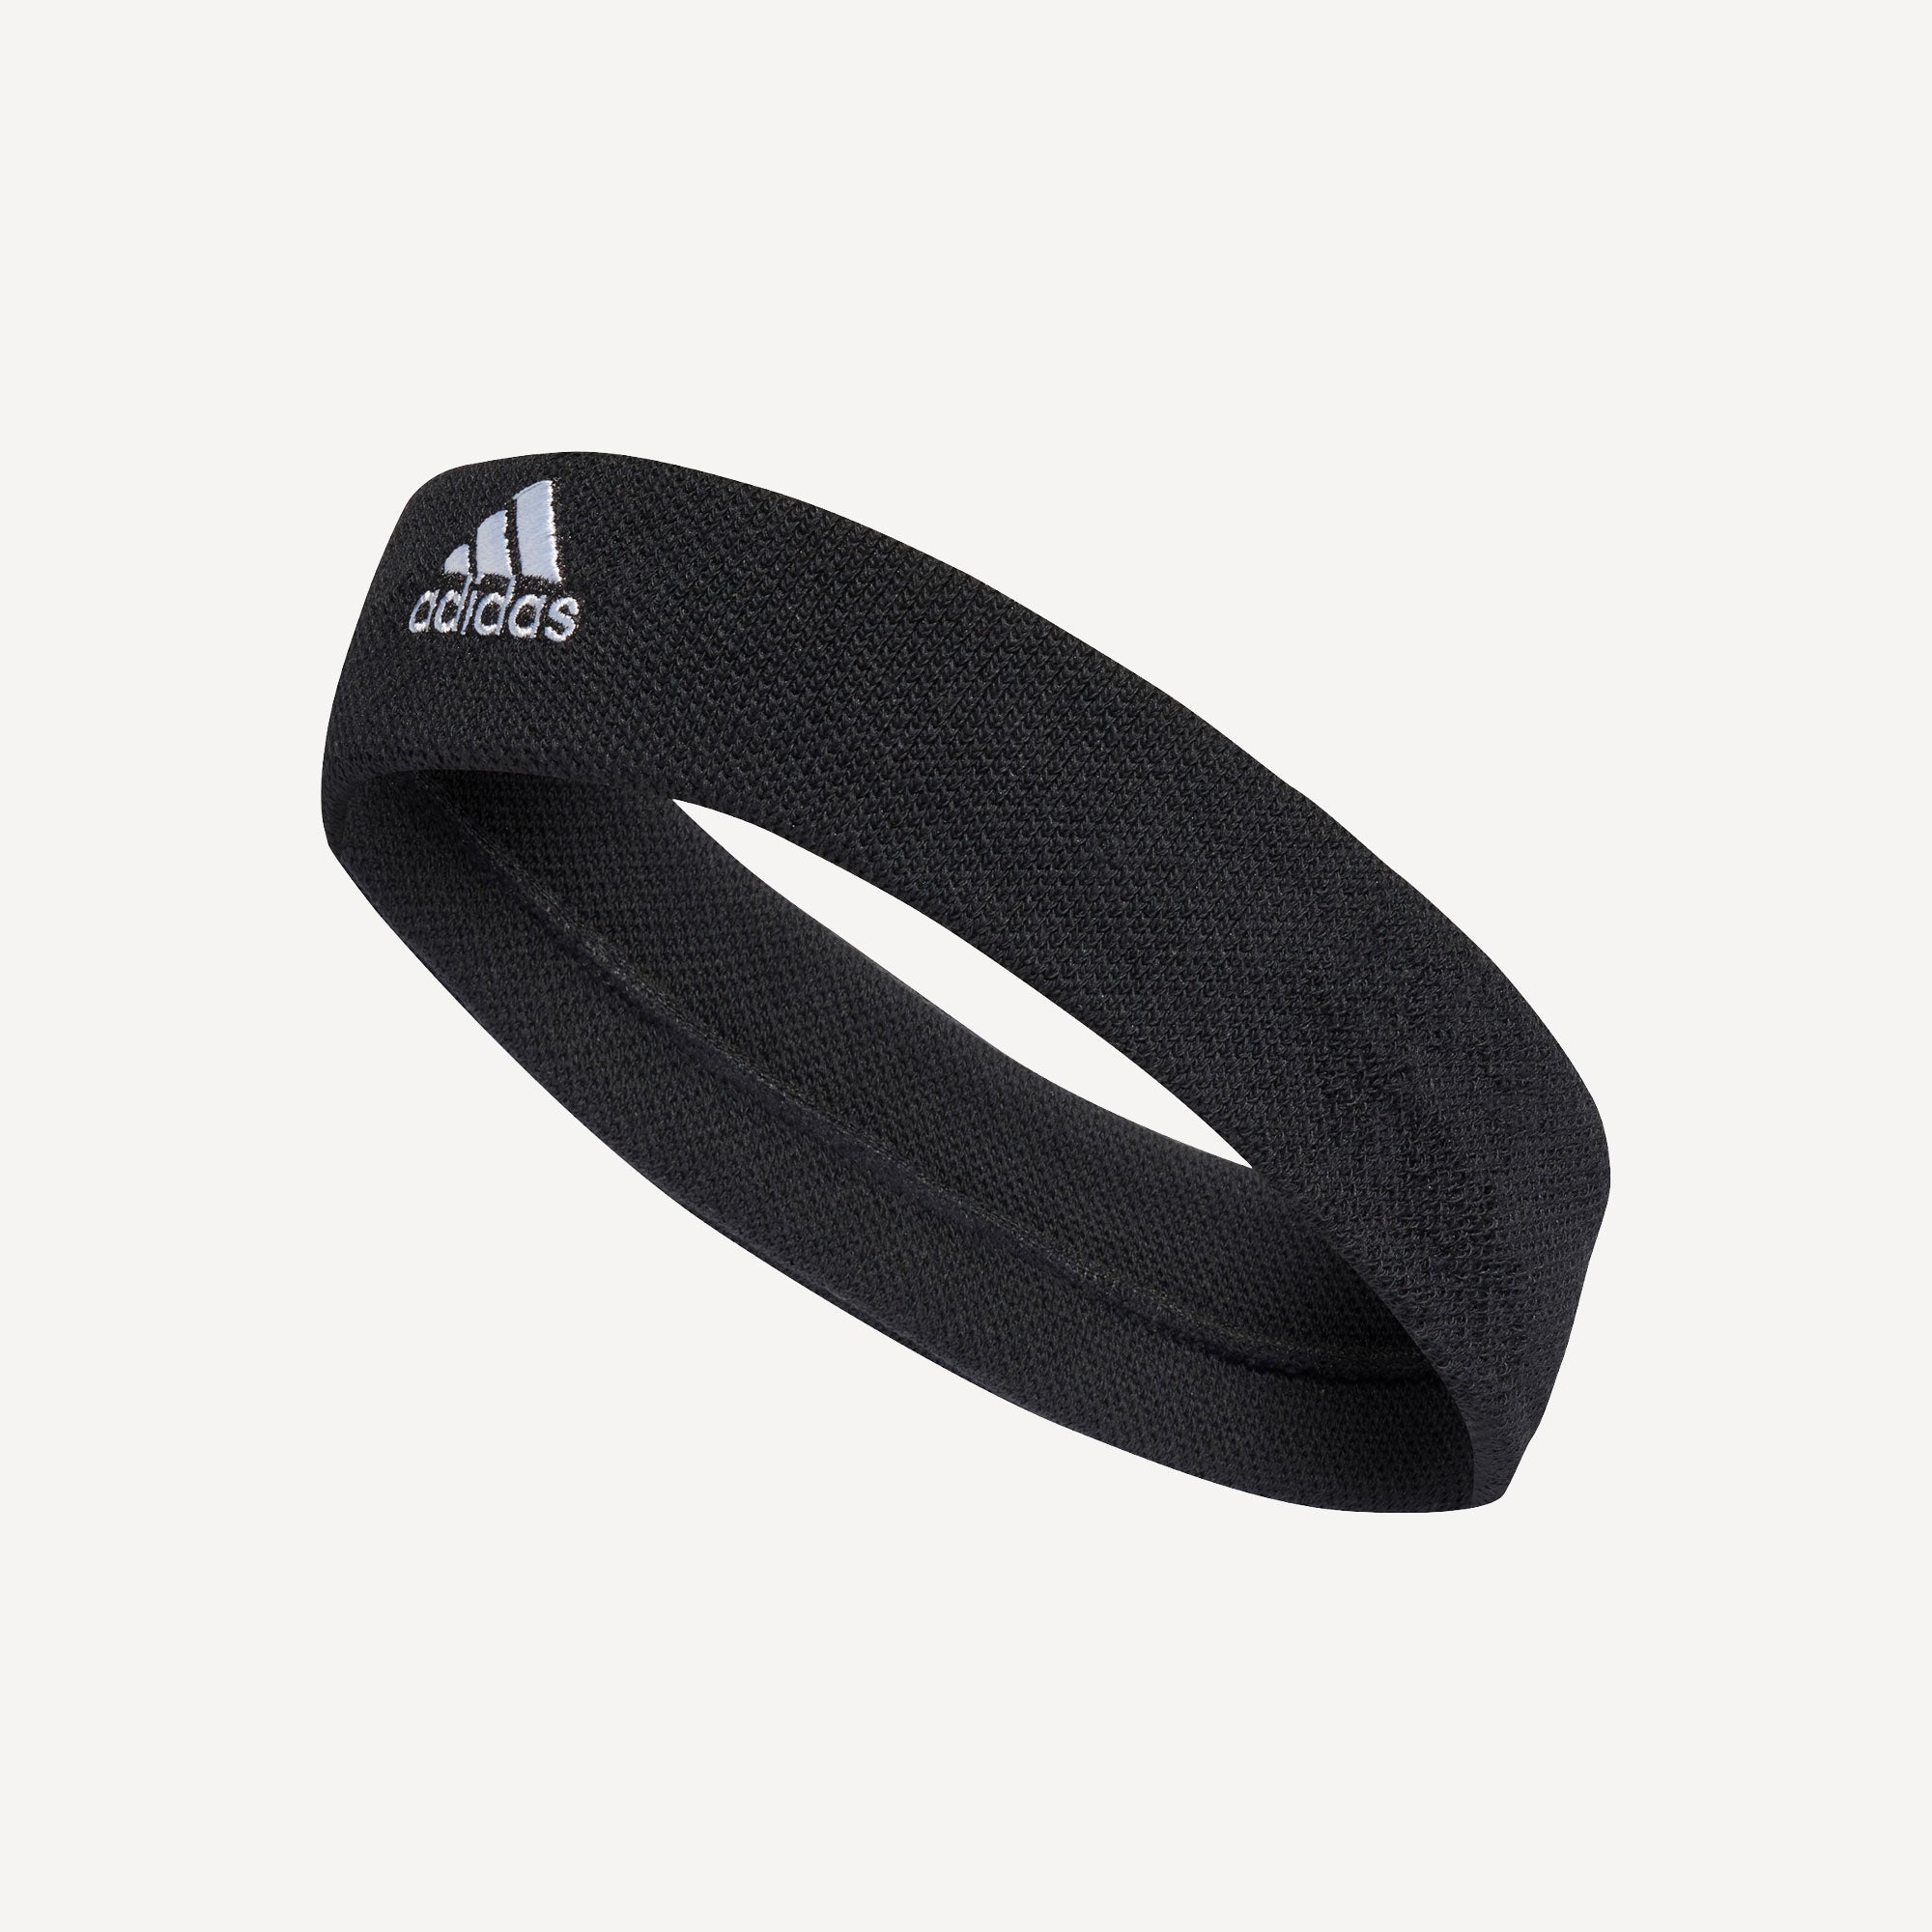 adidas Tennis Headband Black (1)